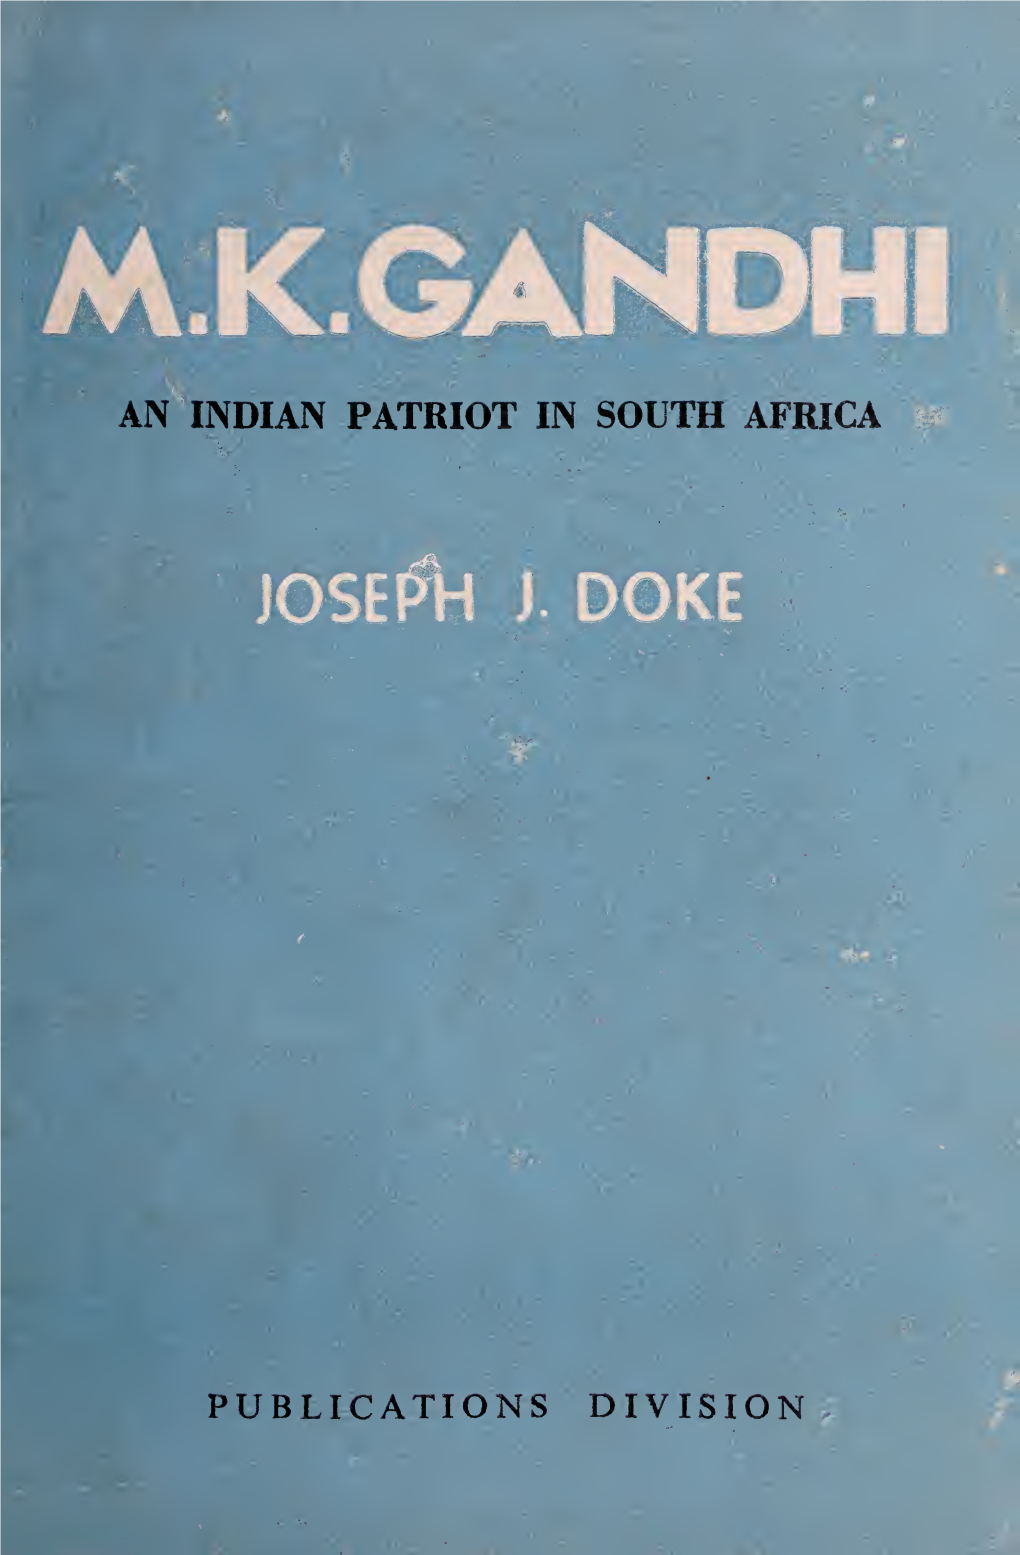 M.K. Gandhi; an Indian Patriot in South Africa